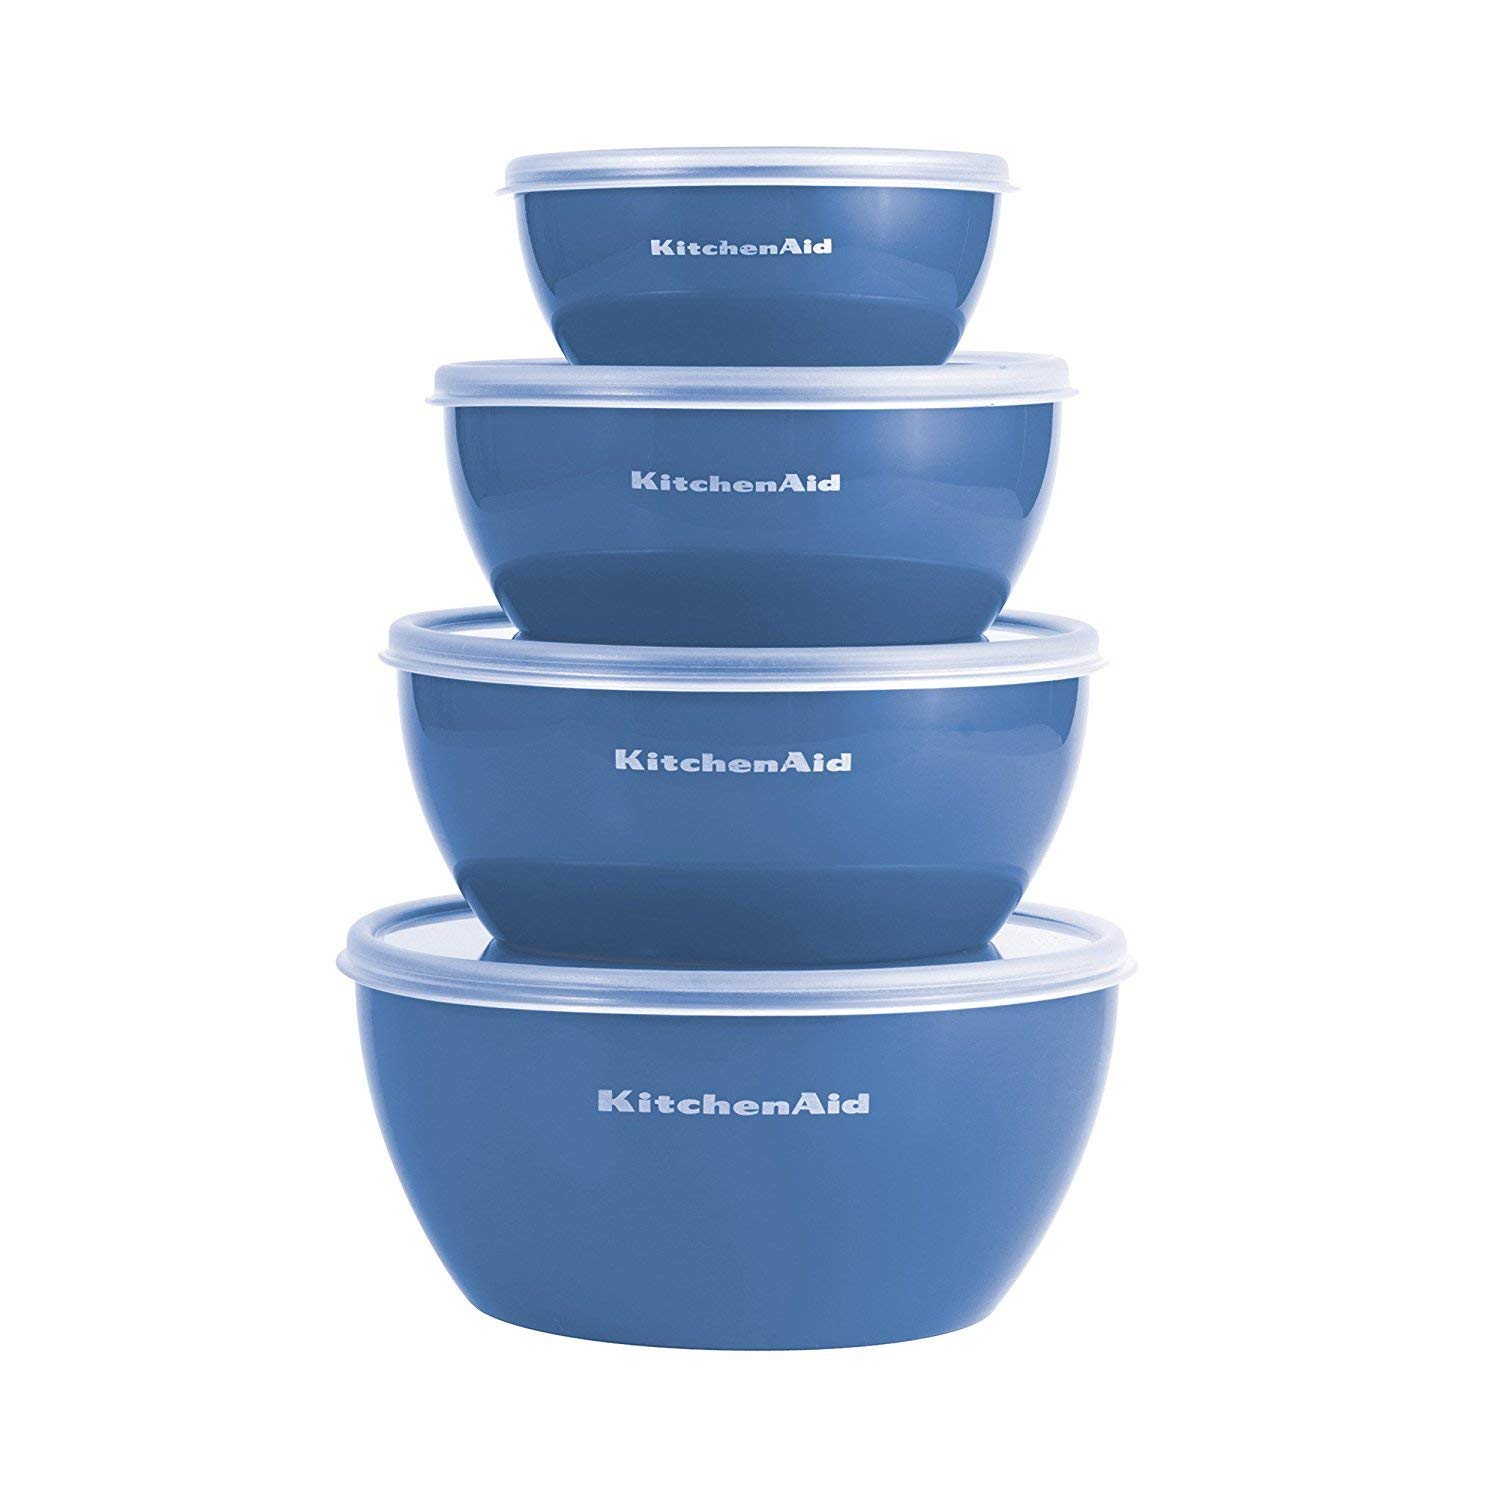 Kitchenaid Prep Bowls with Lids, Set of 4, Ocean Blue – Just $9.22!